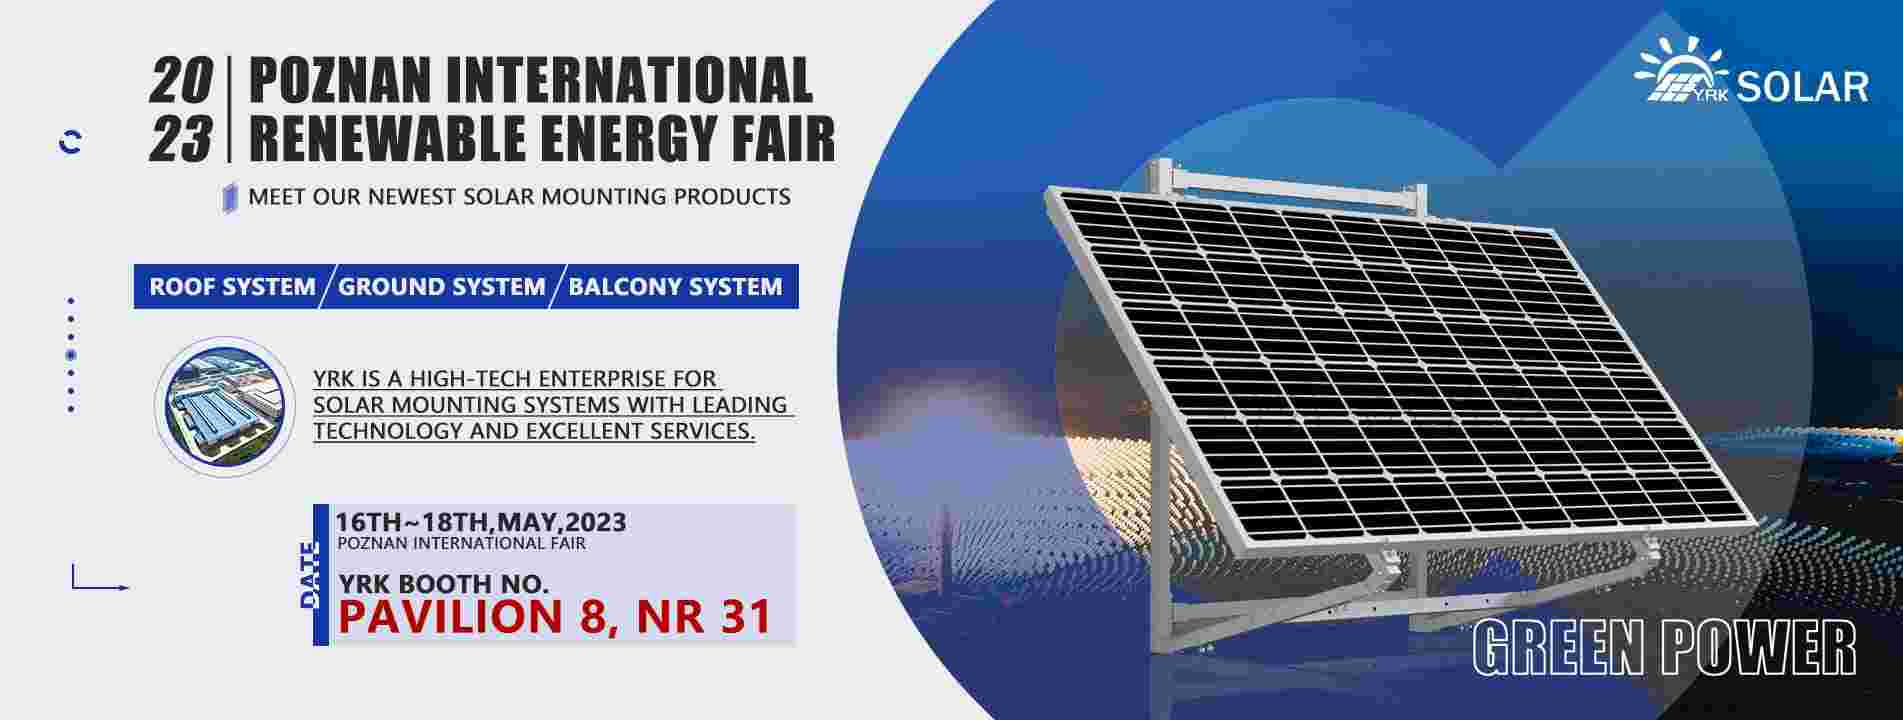 2023 Poznan International Renewable Energy Fair